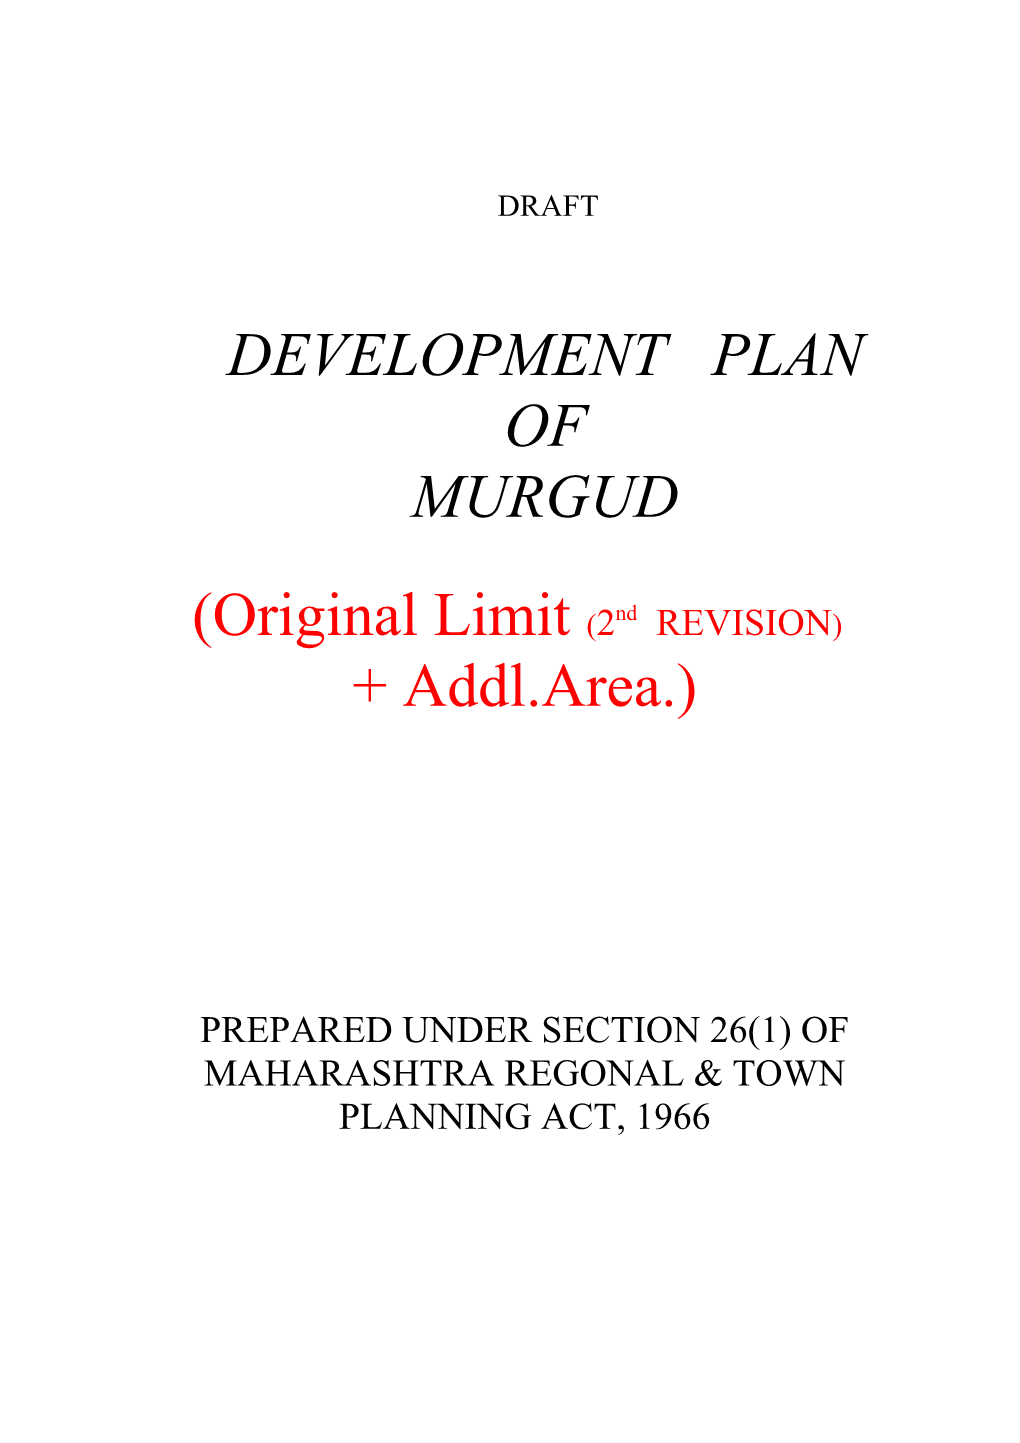 DEVELOPMENT PLAN of MURUGAD (2Nd R.+Addl.Area )